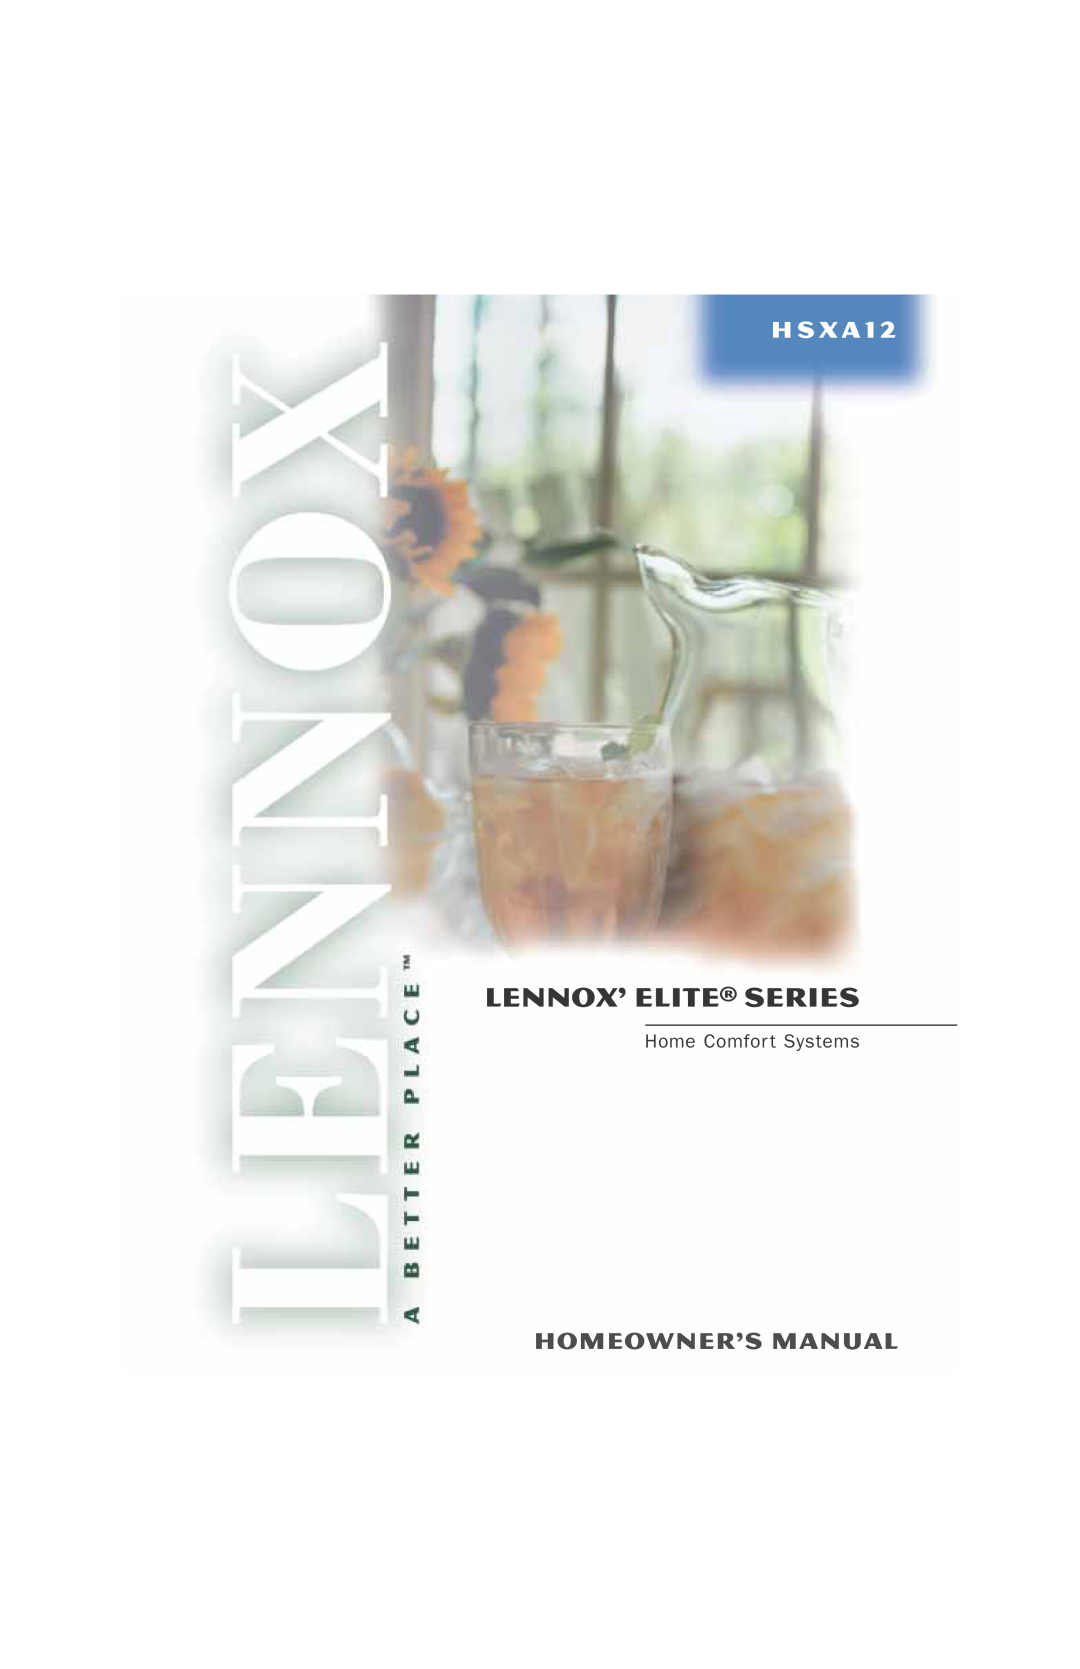 Lennox International Inc HSXA12 owner manual Lennox’ Elite SERIES, H S x a, Home Comfor t Systems 